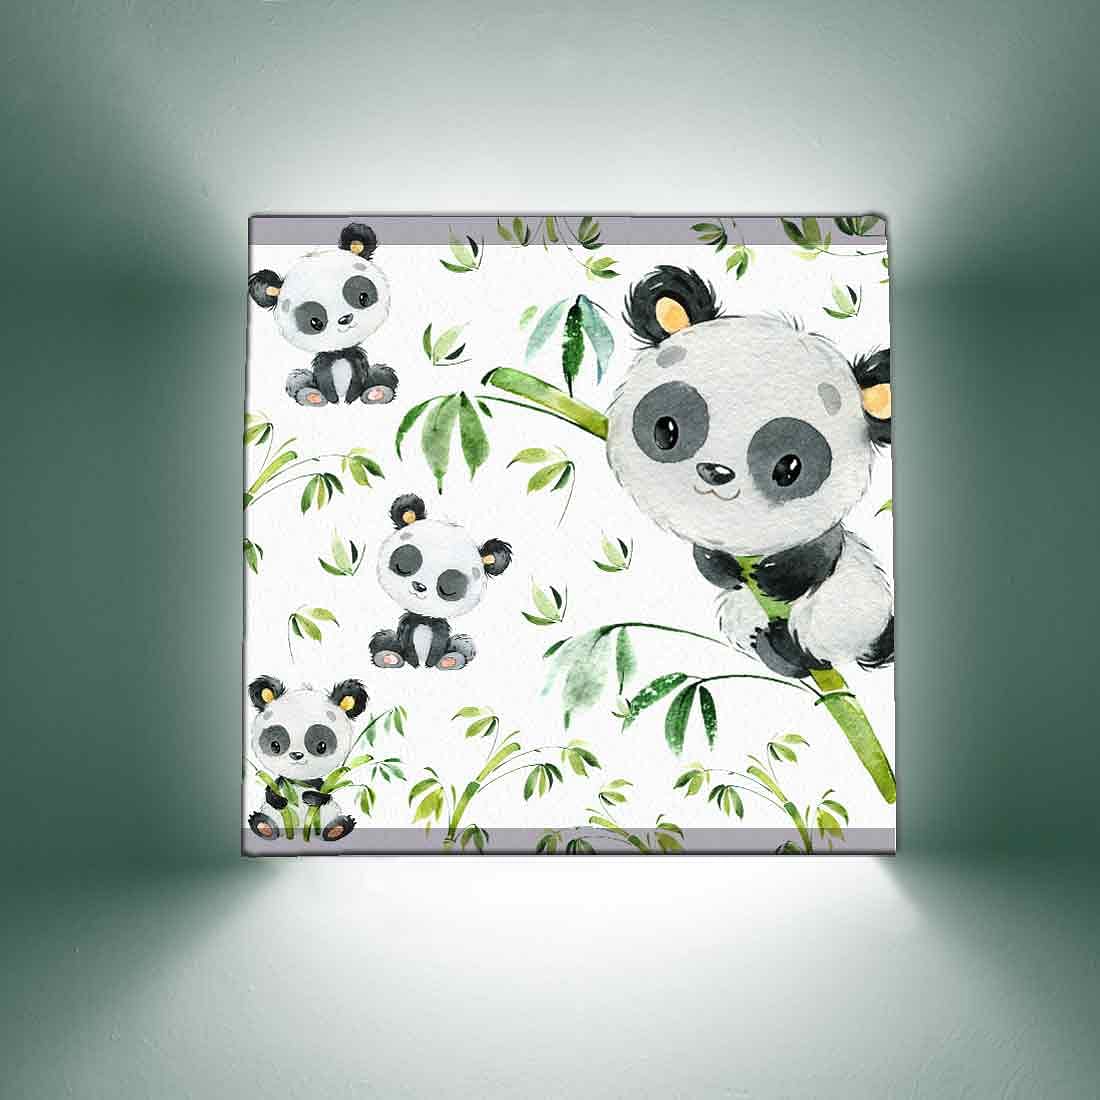 Square Designer kids Wall Light Lamps - Cute Panda Nutcase